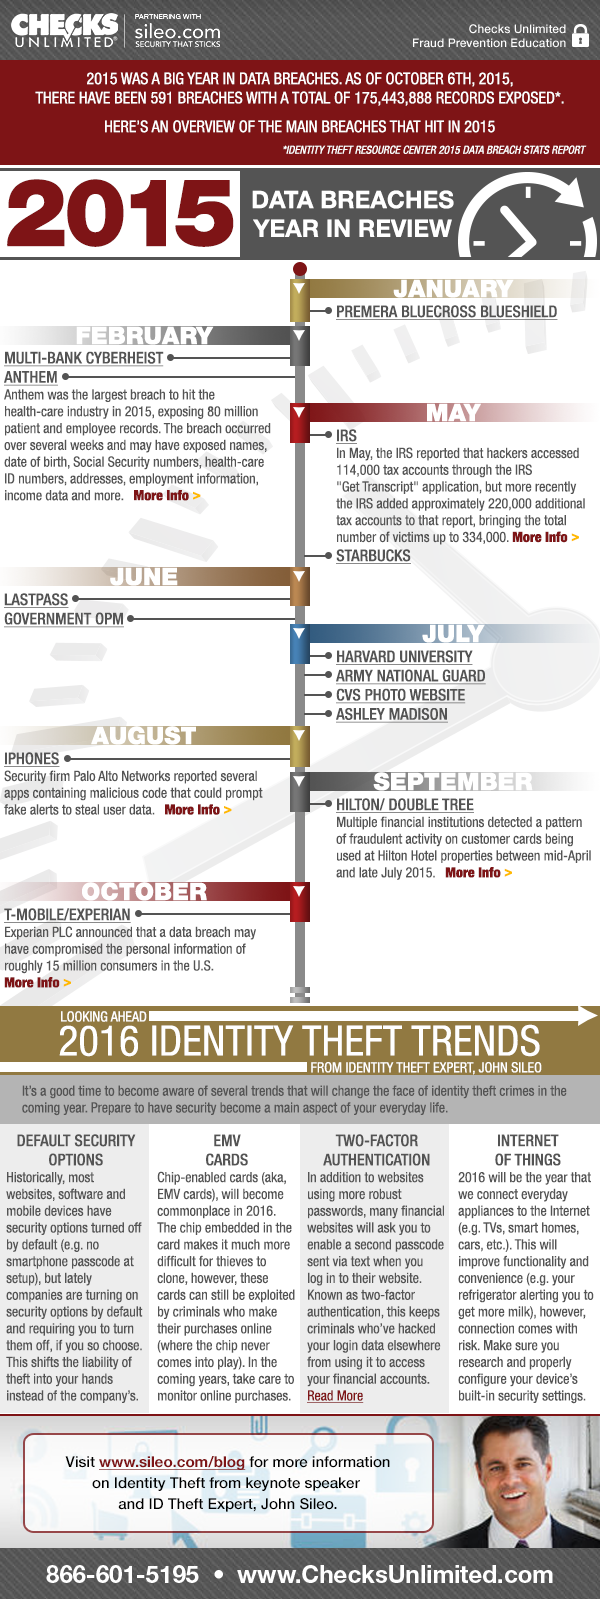 Data Breach 2015 Summary Image